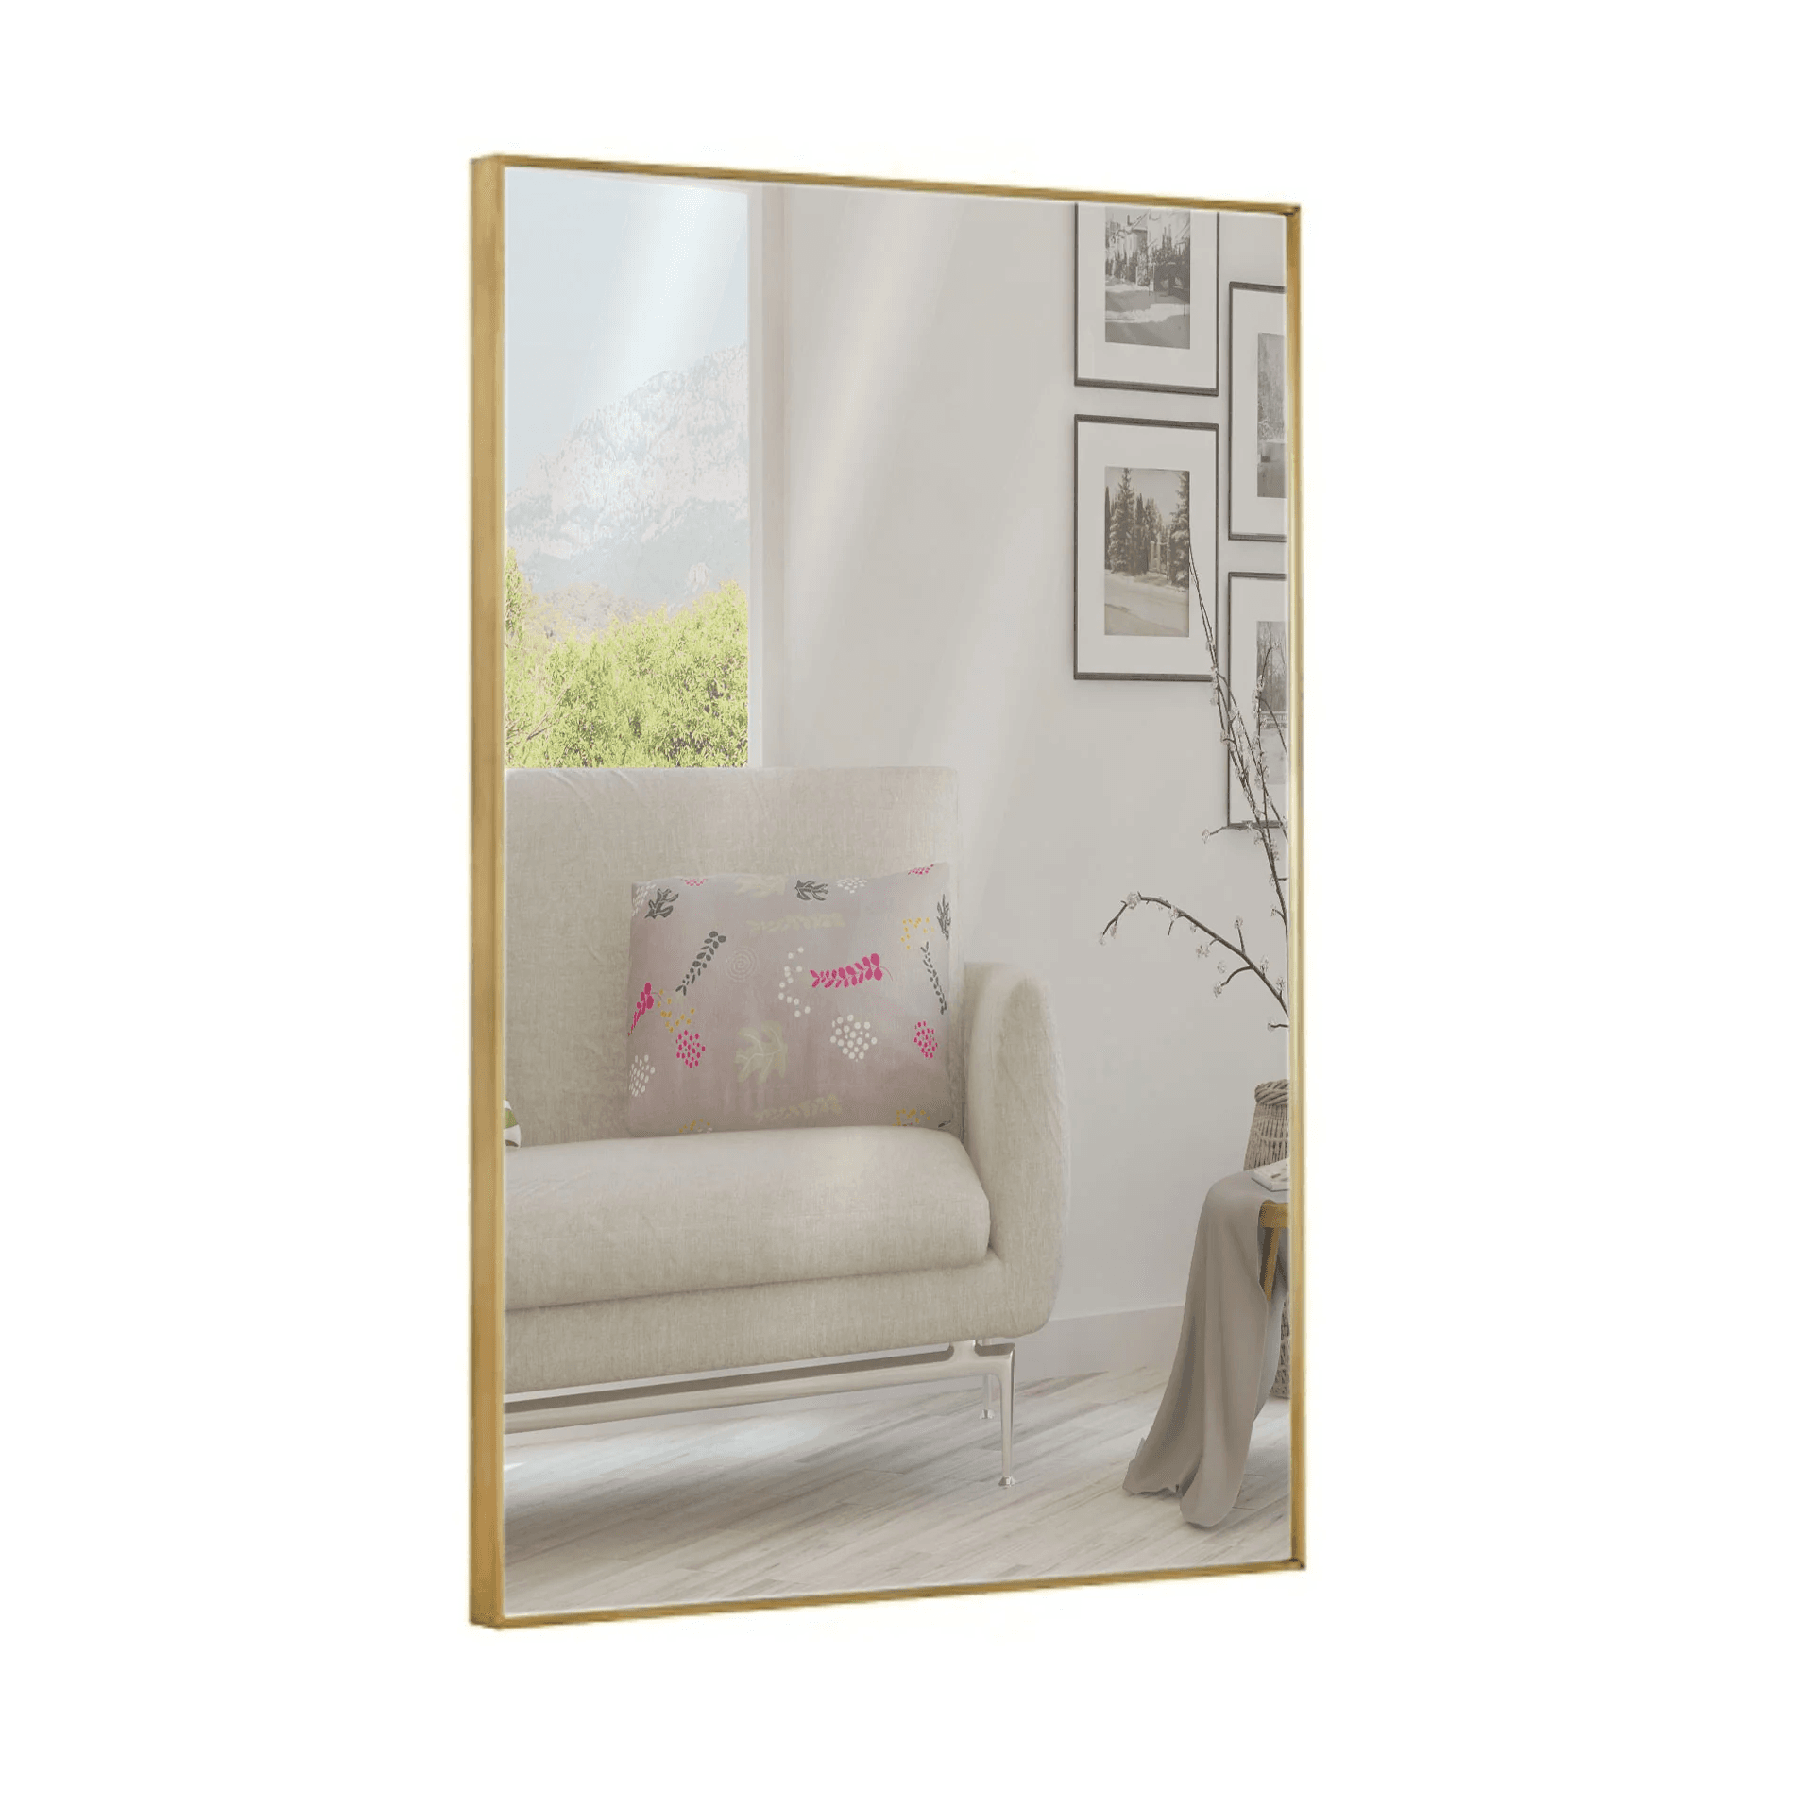 Montessori Hamilton Hills Wall Mounted Framed Mirror Gold 24 x 36 Inches